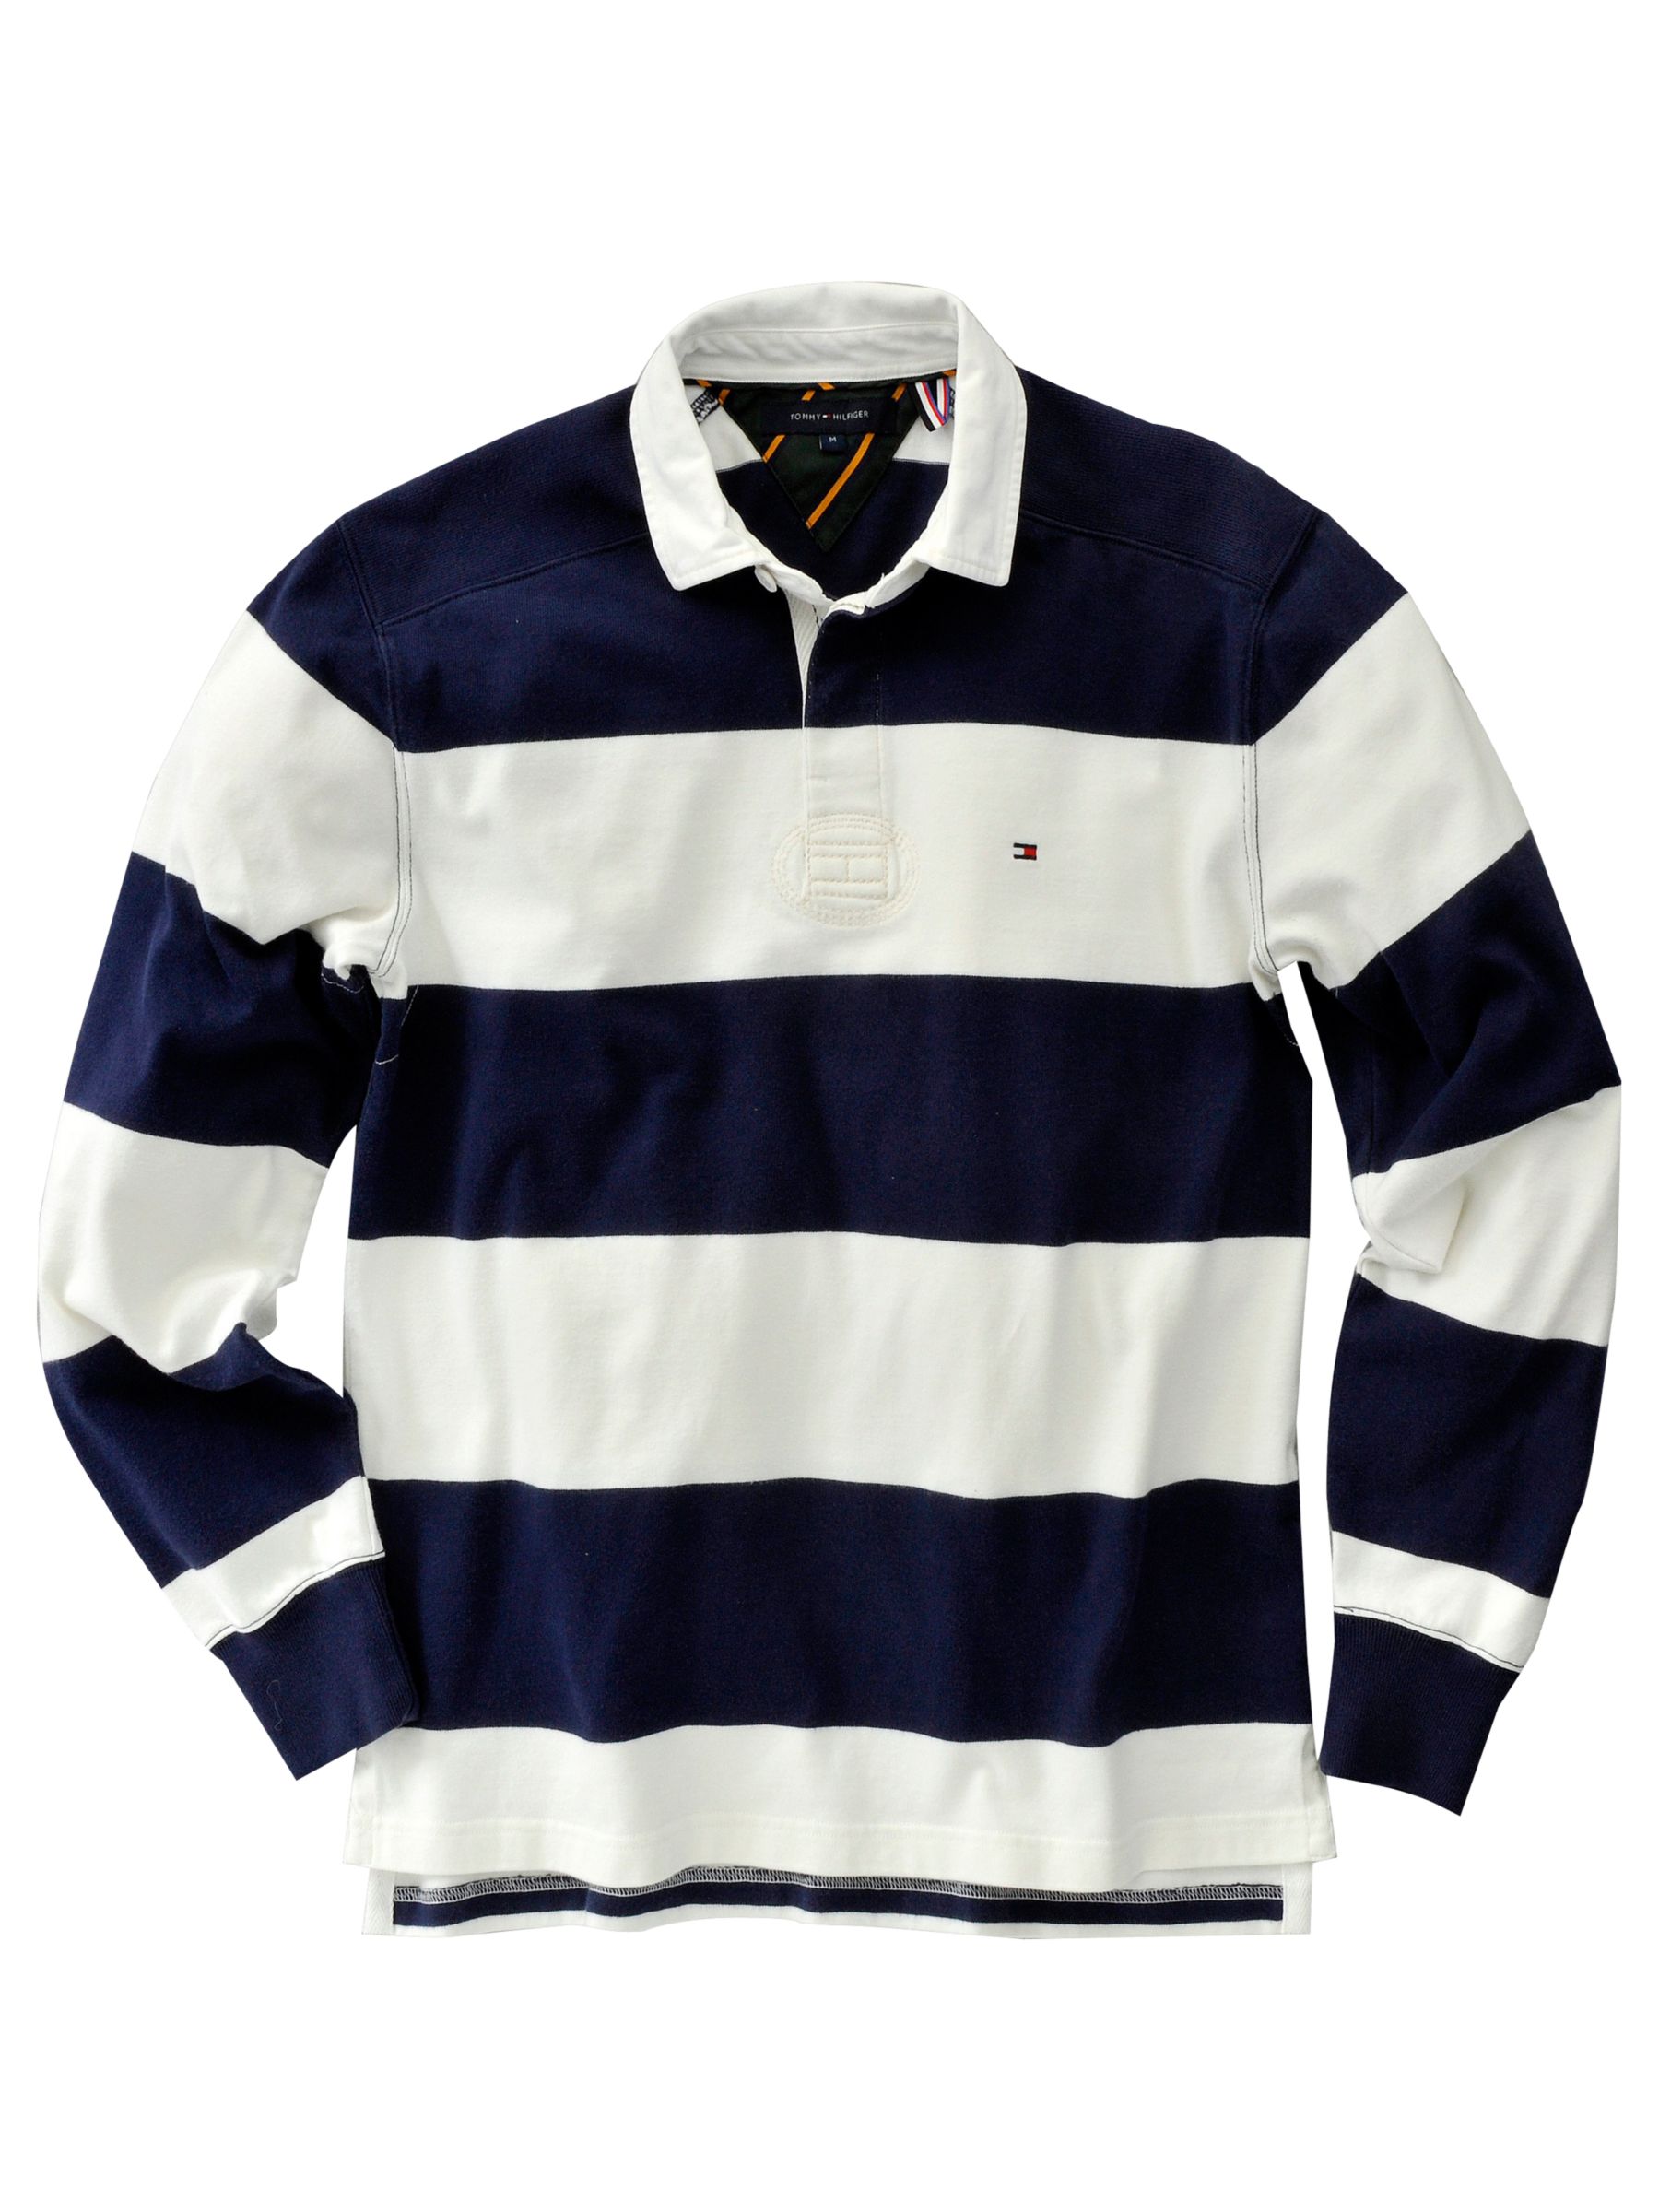 Patrick Rugby Shirt, Navy/white